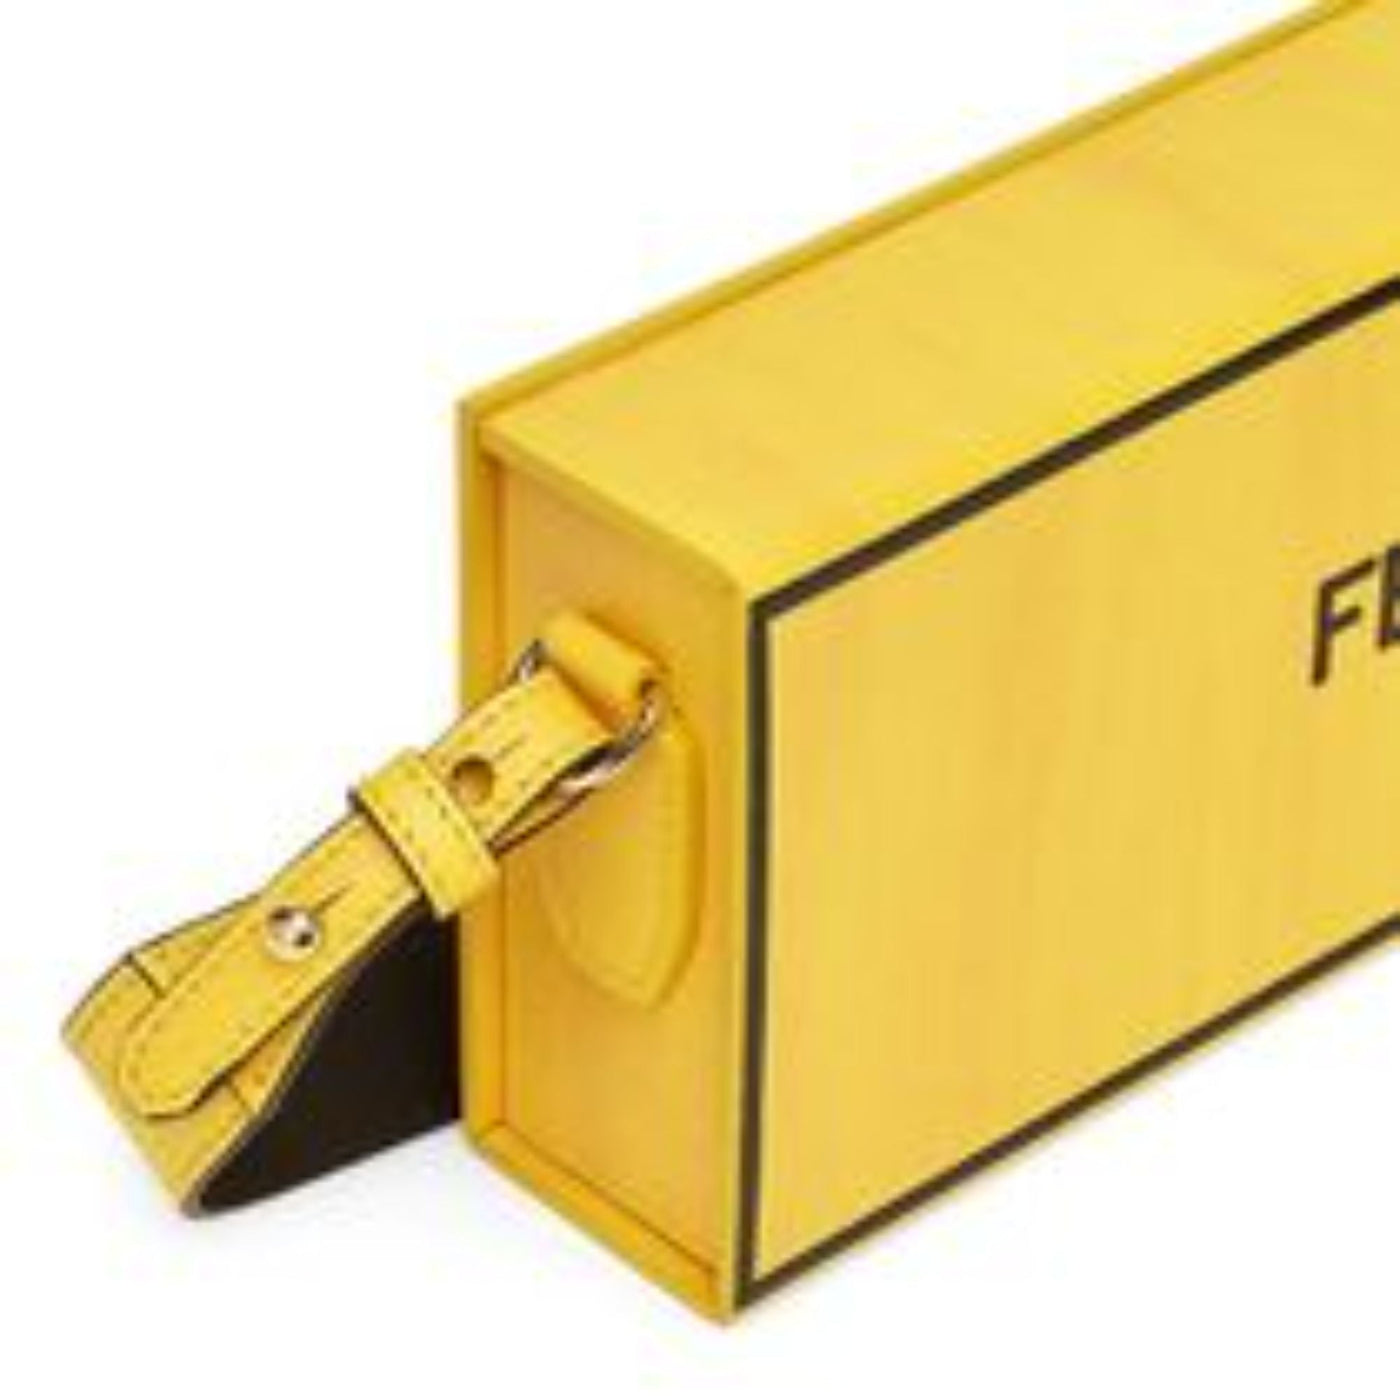 Fendi Roma Horizontal Box Yellow Leather Shoulder Bag - LUXURYMRKT